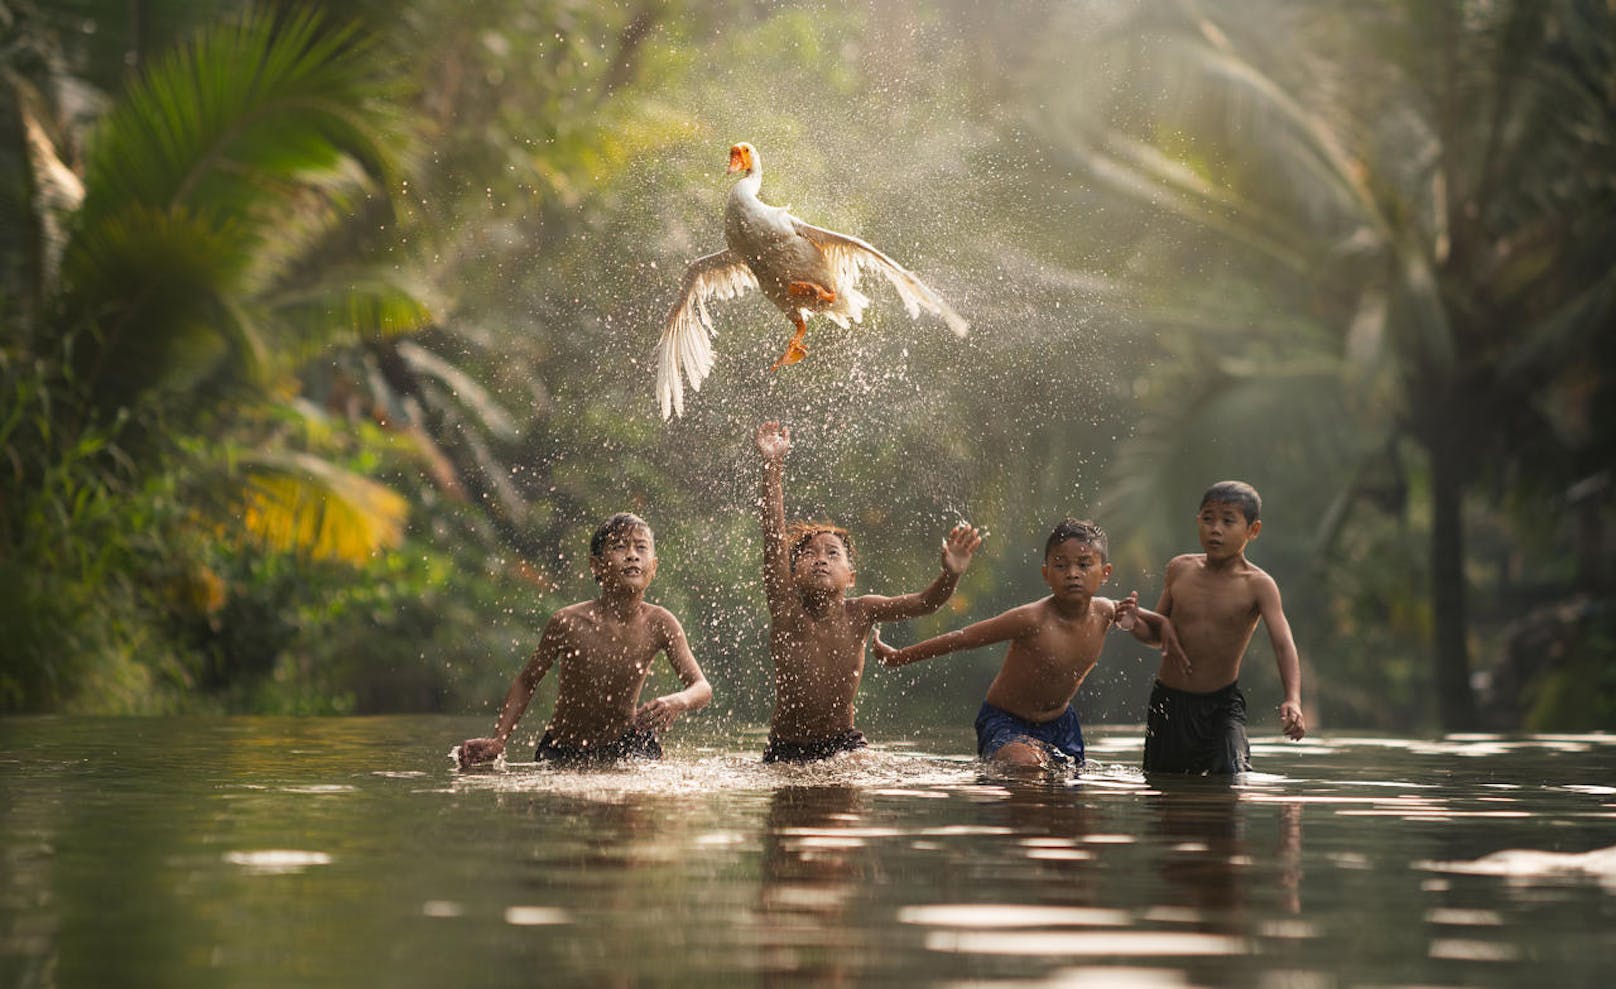 Alexandrino Lei Arosa, "Kids chasing the goose"